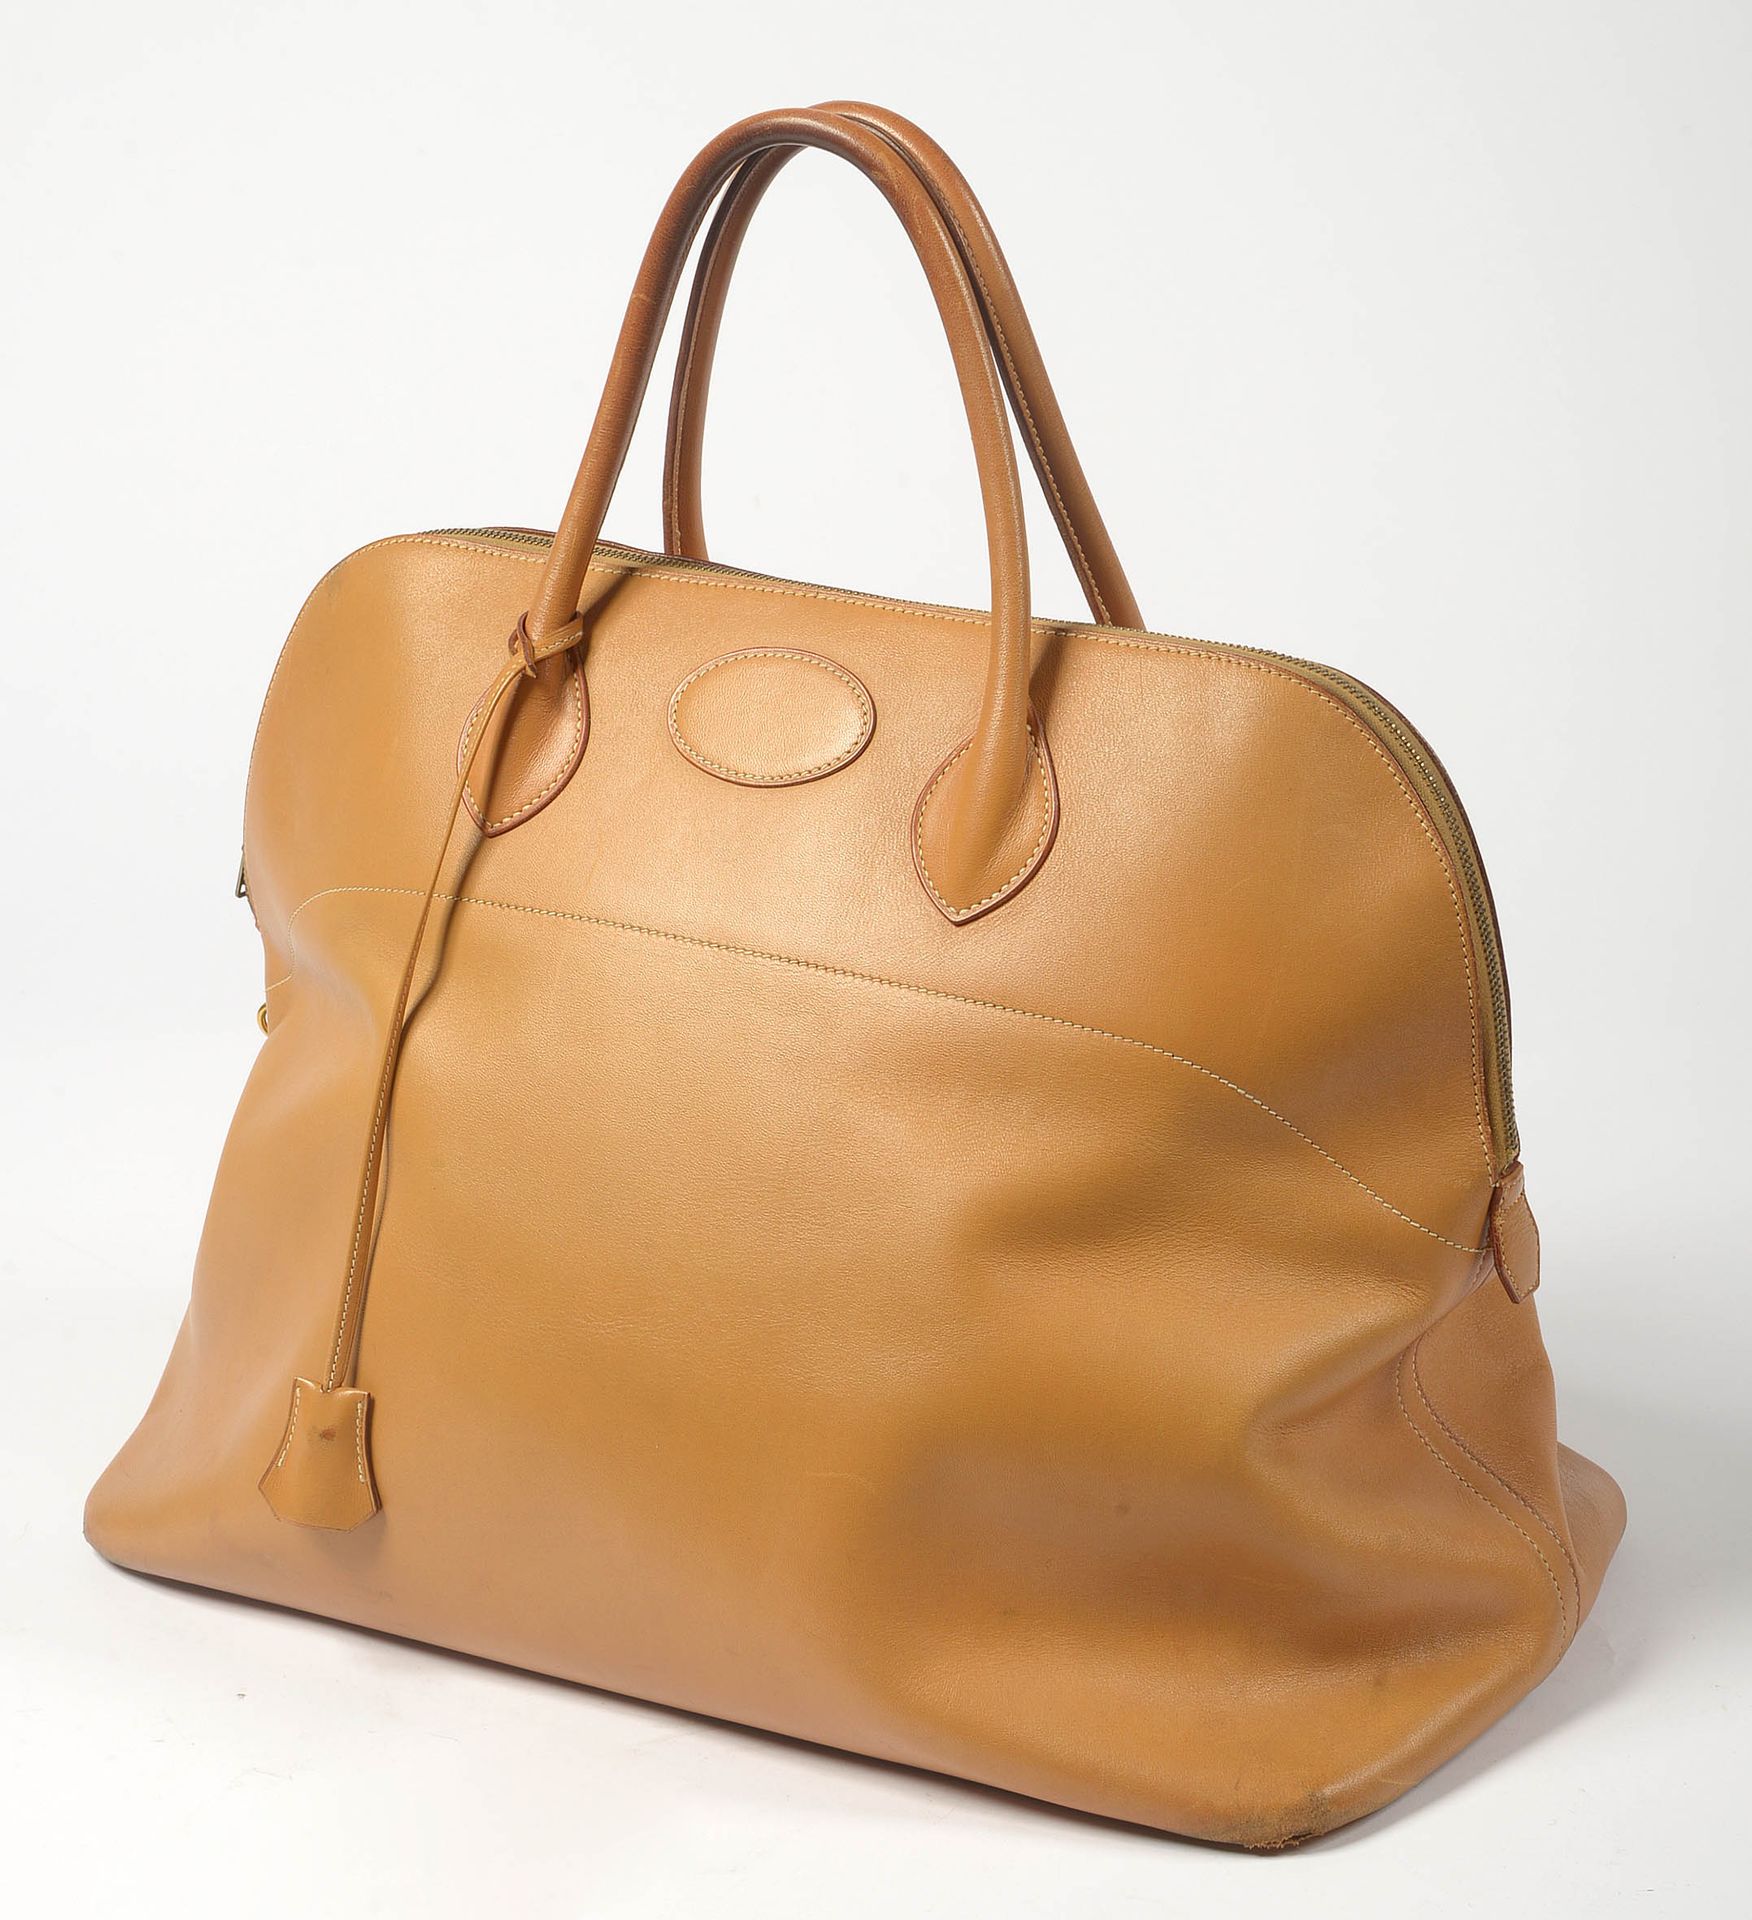 HERMES Paris Travel bag brand Hermes, model Bolide relax 45 of camel color. In g&hellip;